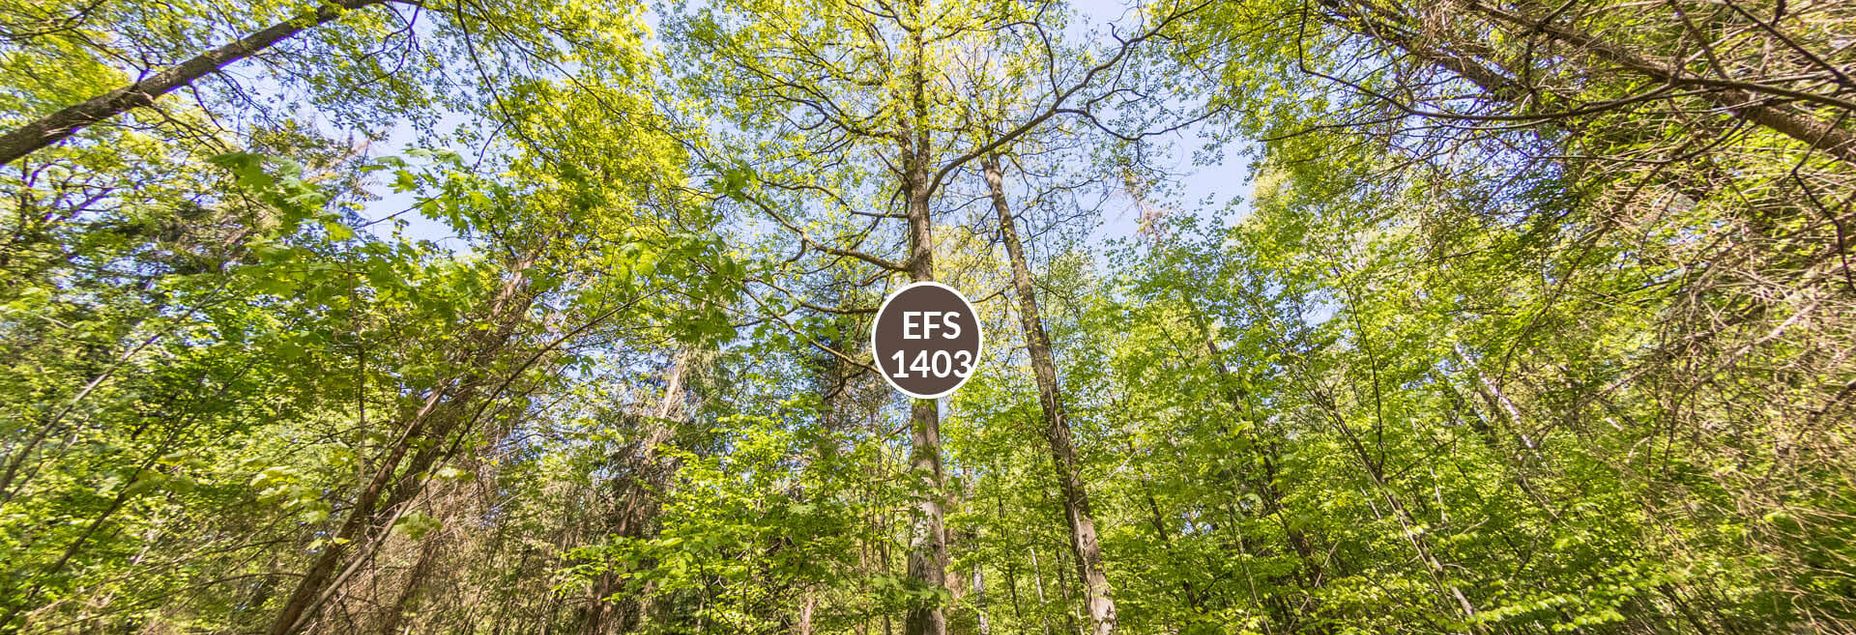 Baum EFS 1403 - Fisheyeperspektive